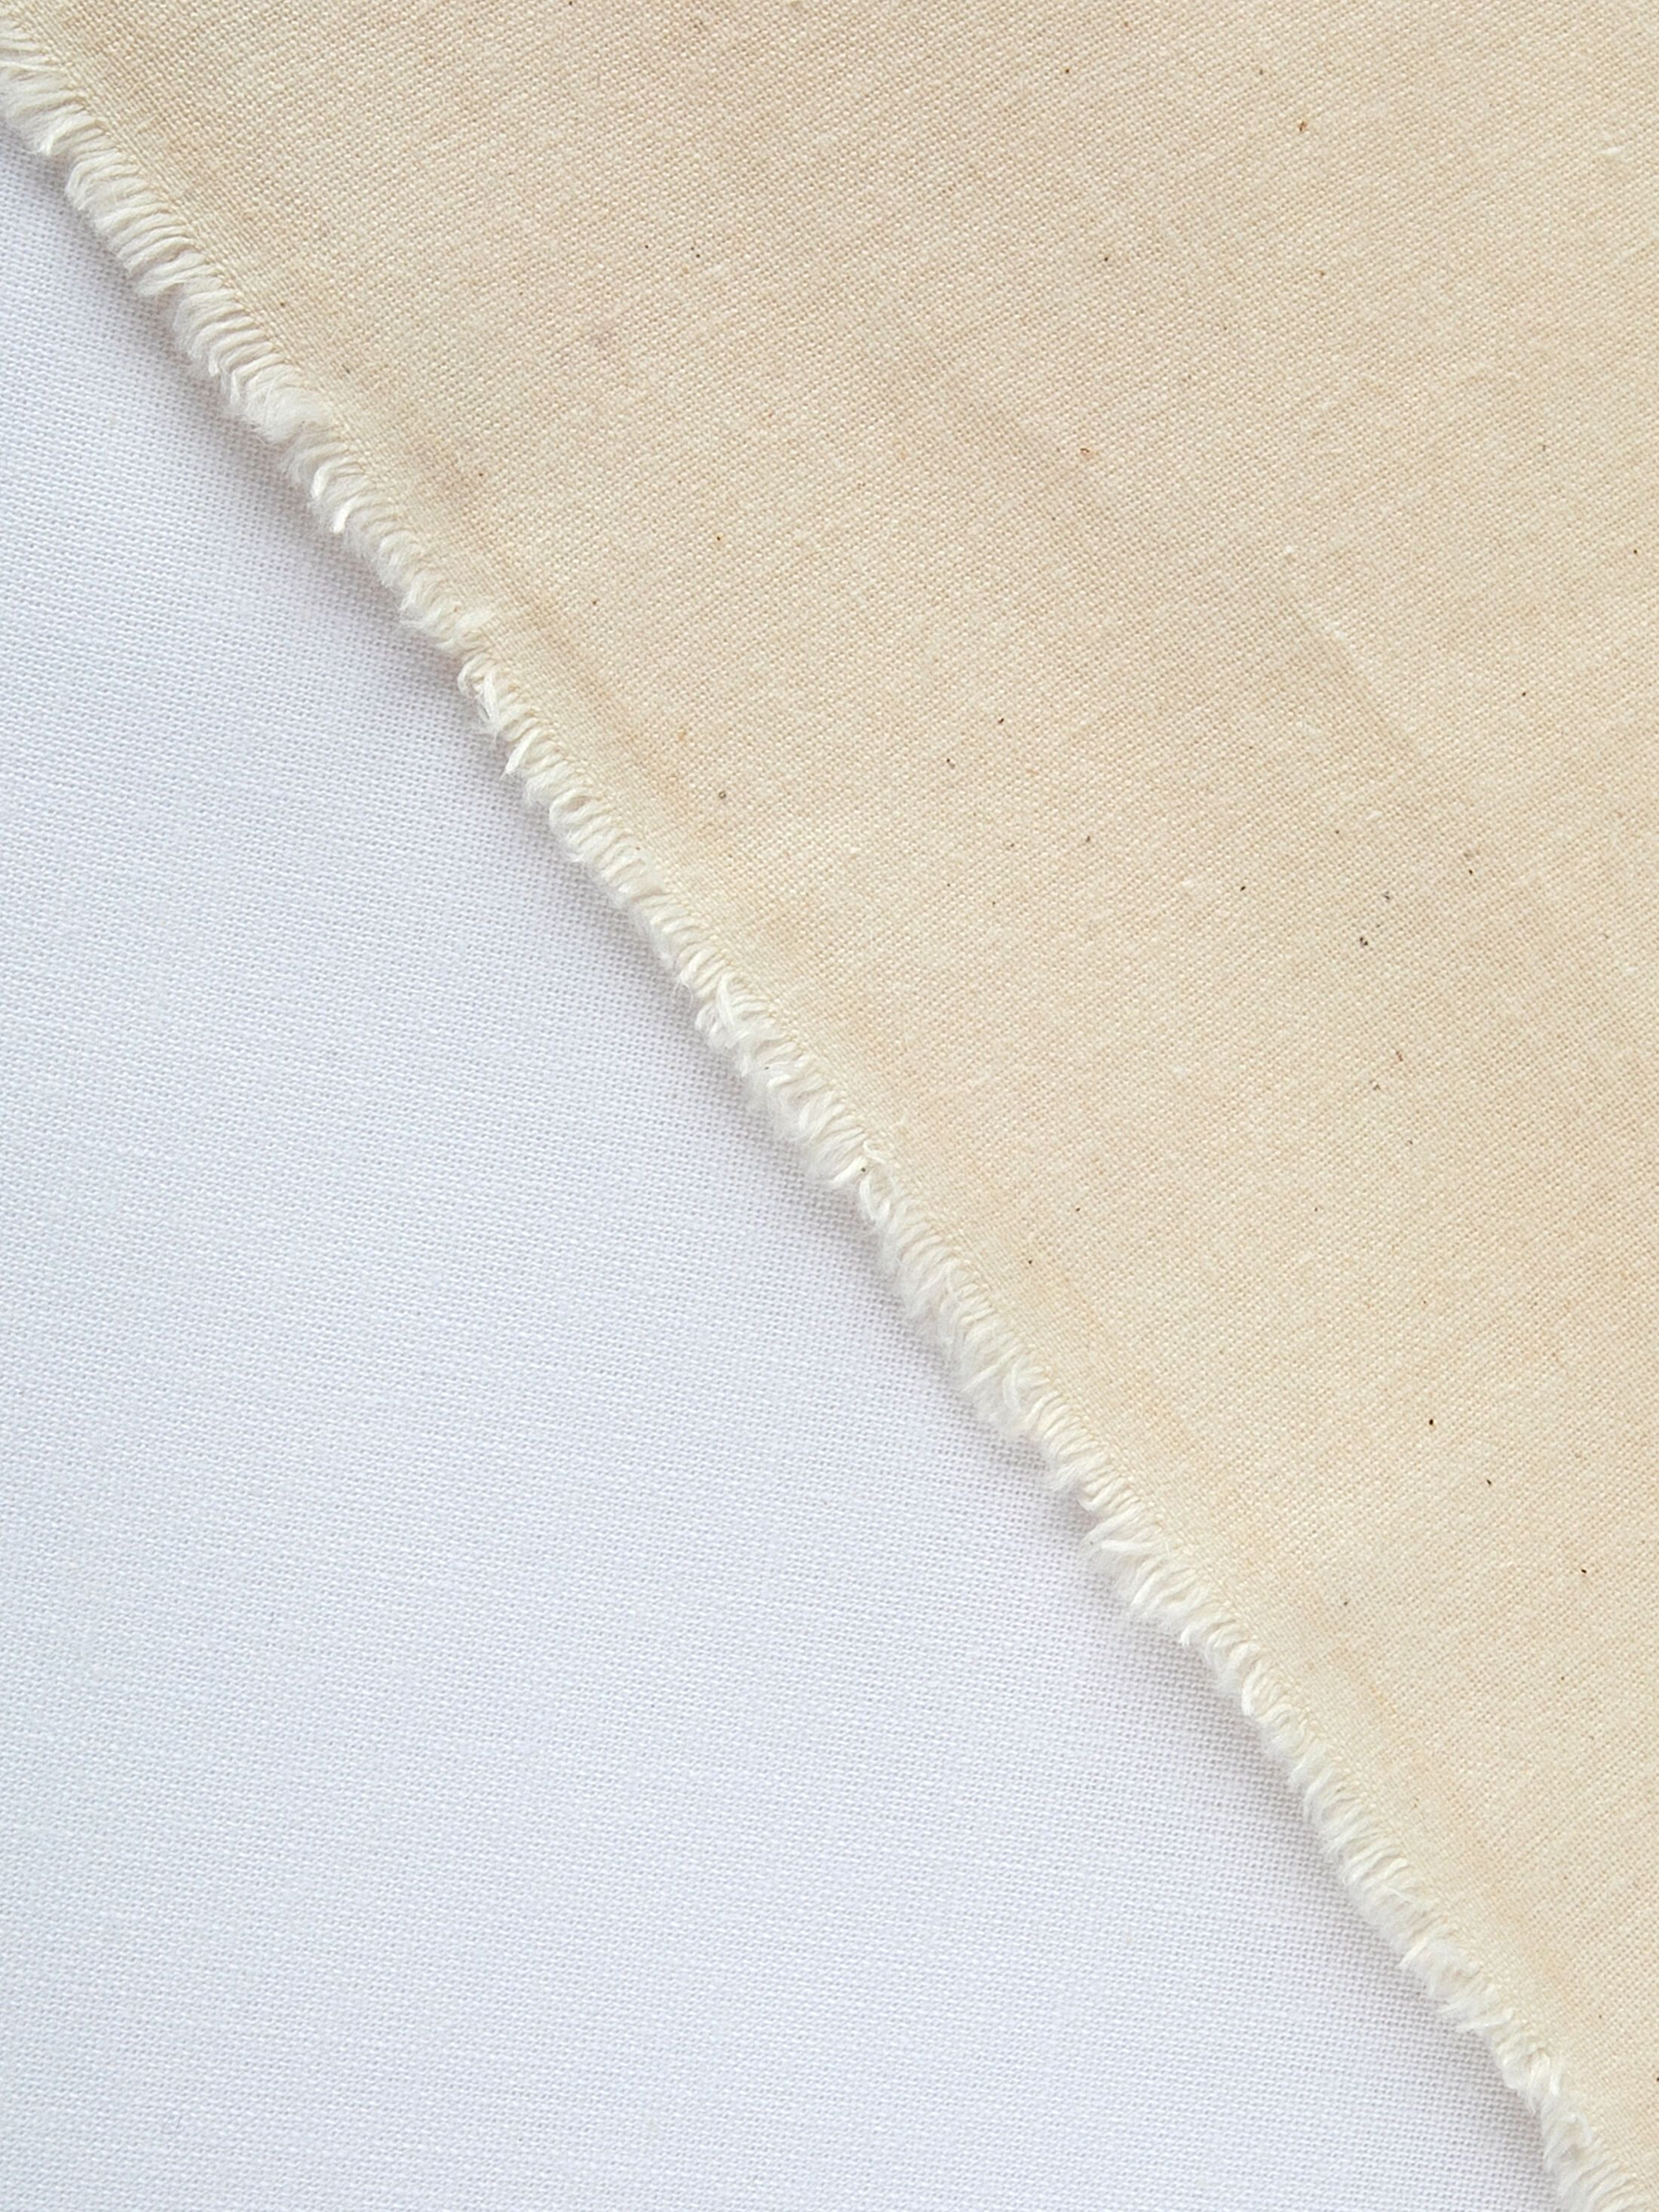 white and organic cotton calico